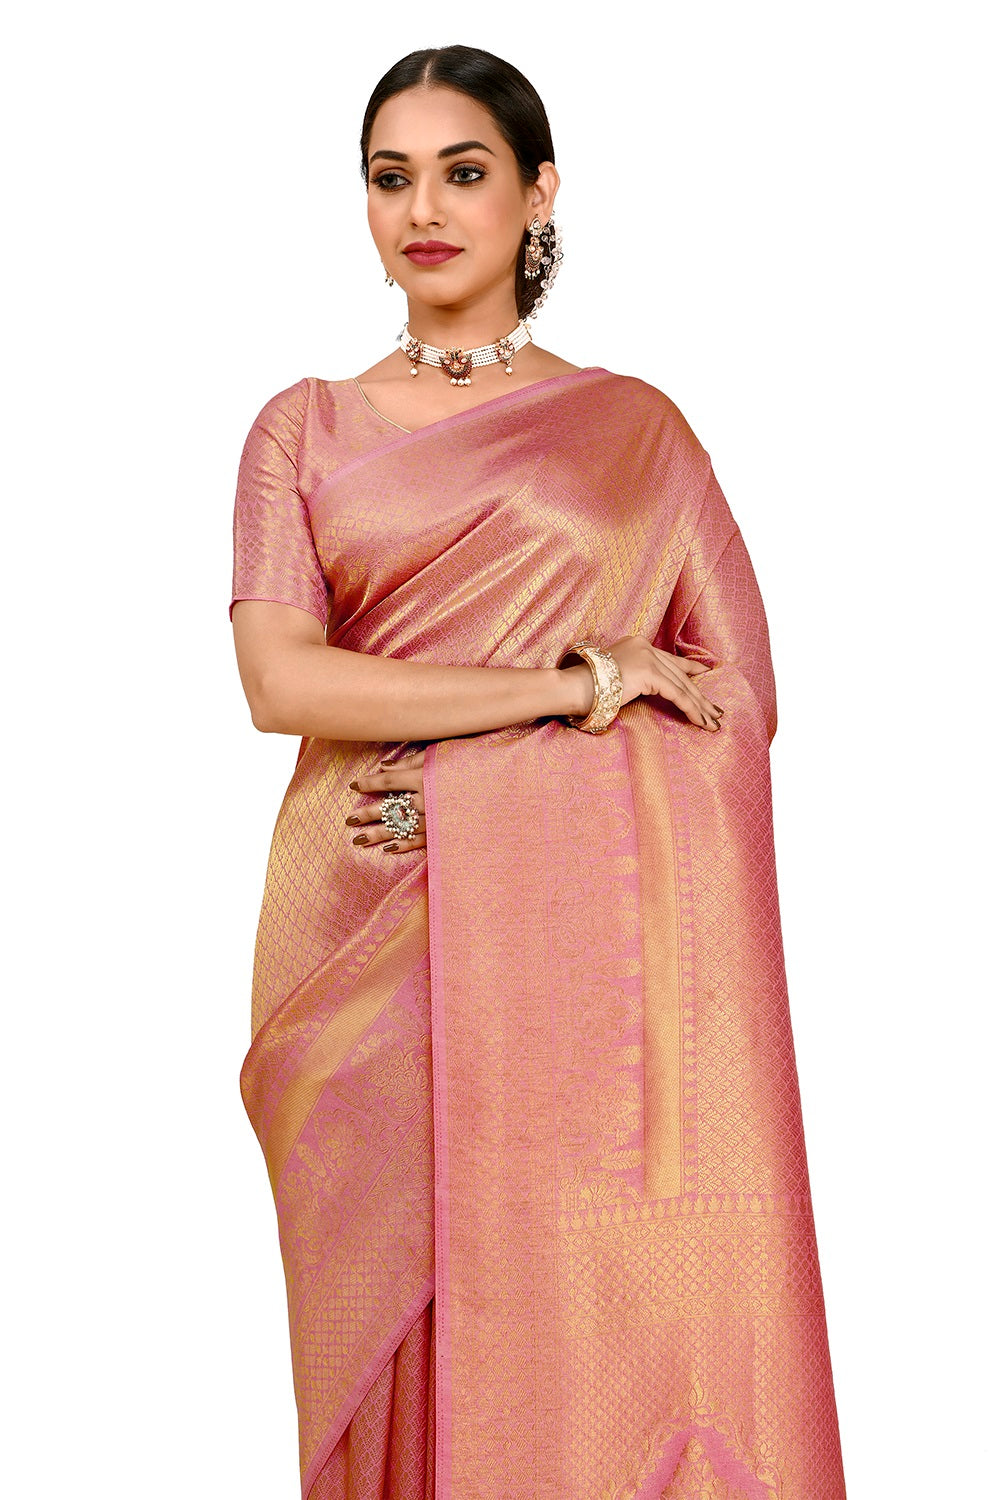 silk saree blouse designs front and back – Joshindia